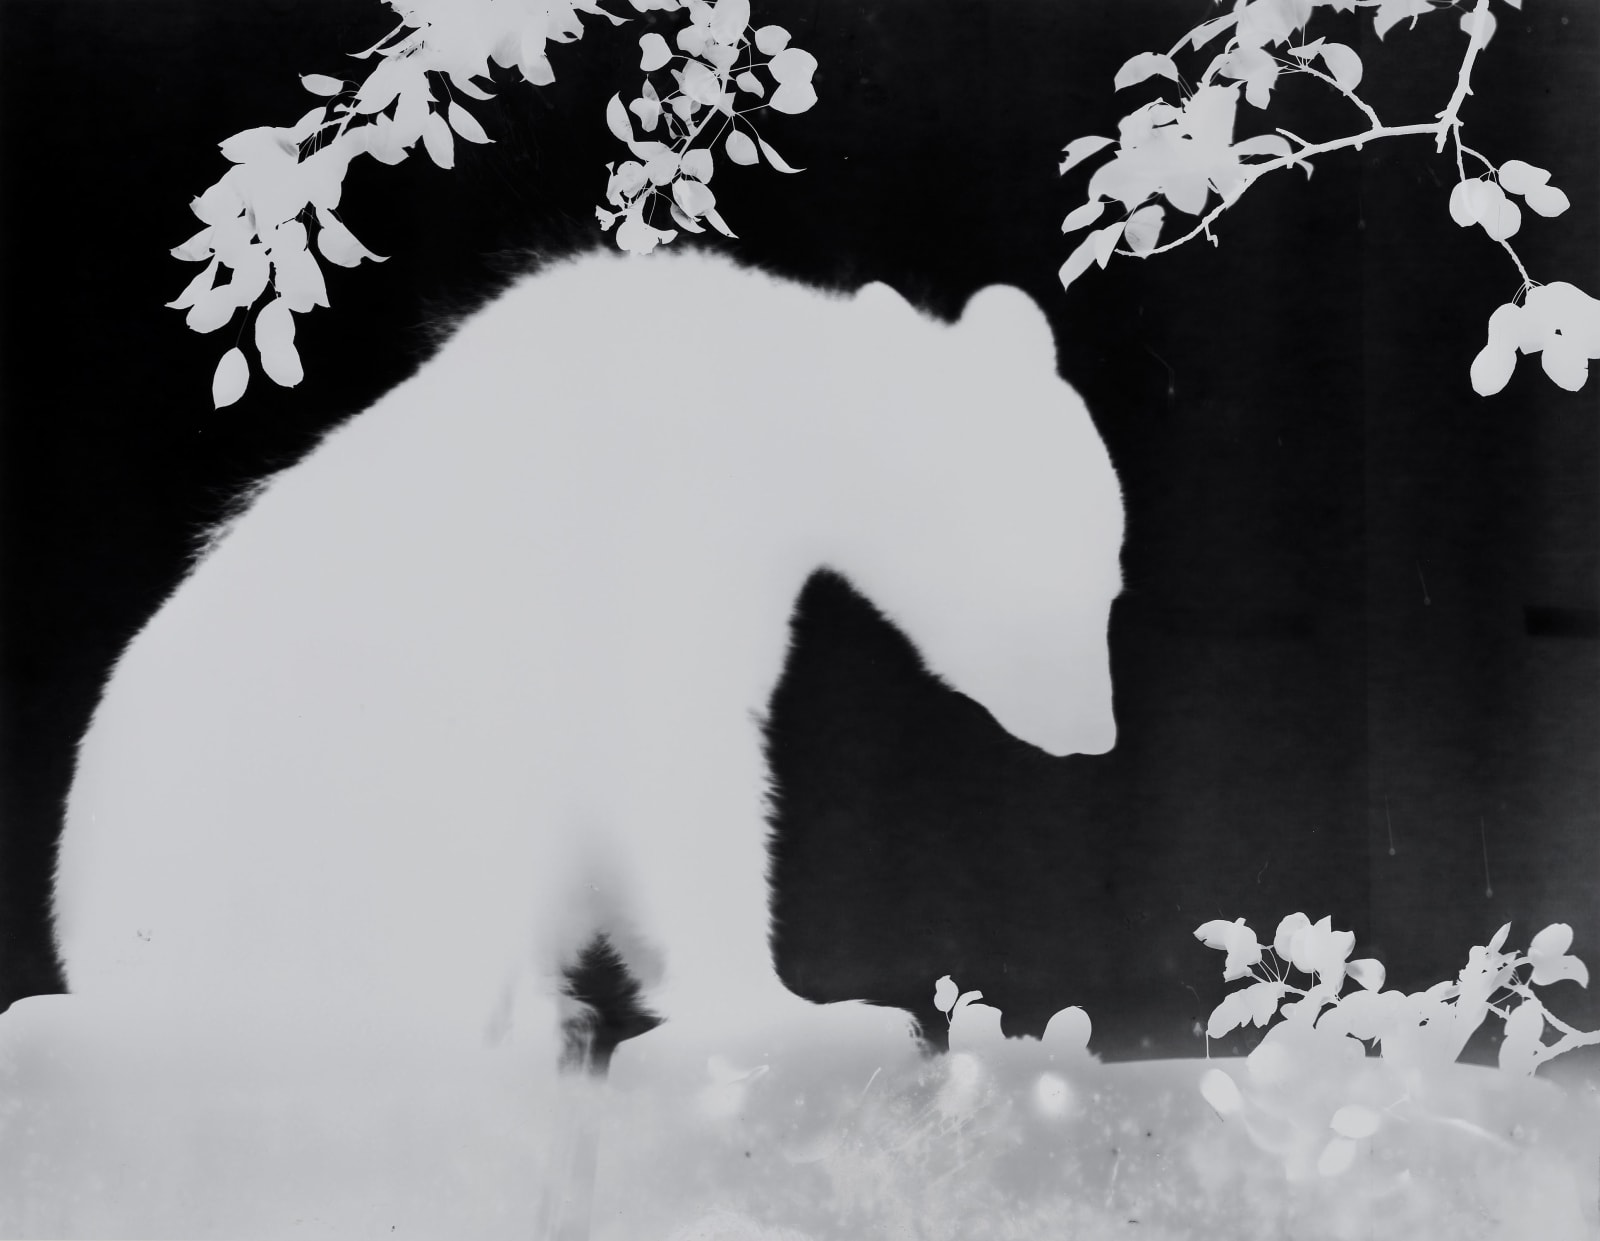 Zana Briski, Bearogram 9.2.20 9.19pm, photogram of bear looking down with tree branches